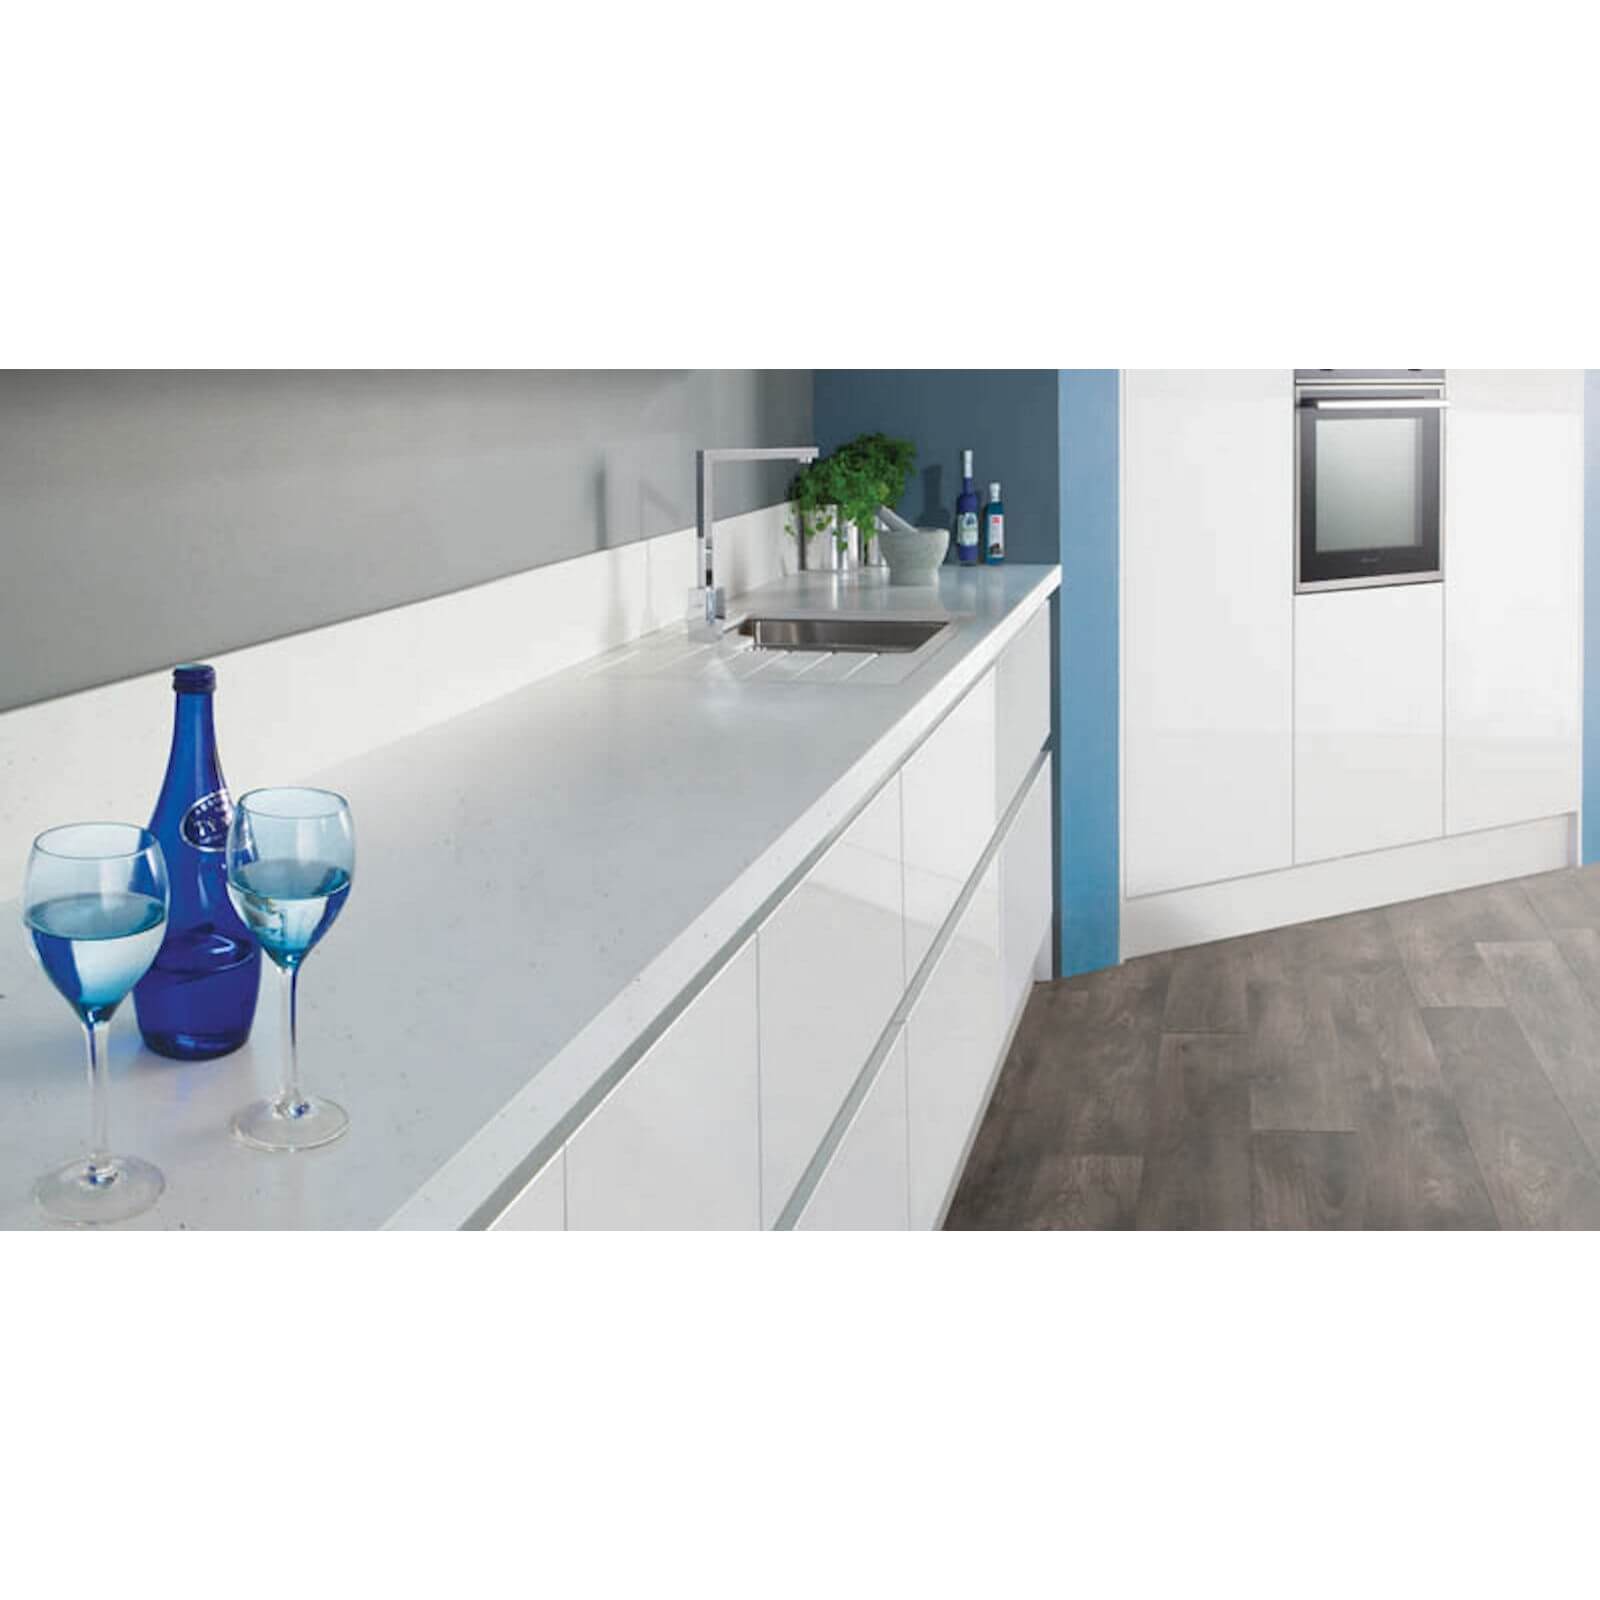 Maia Calcite Kitchen Sink Worktop - Universal Super Large Bowl - 3600 x 650 x 42mm